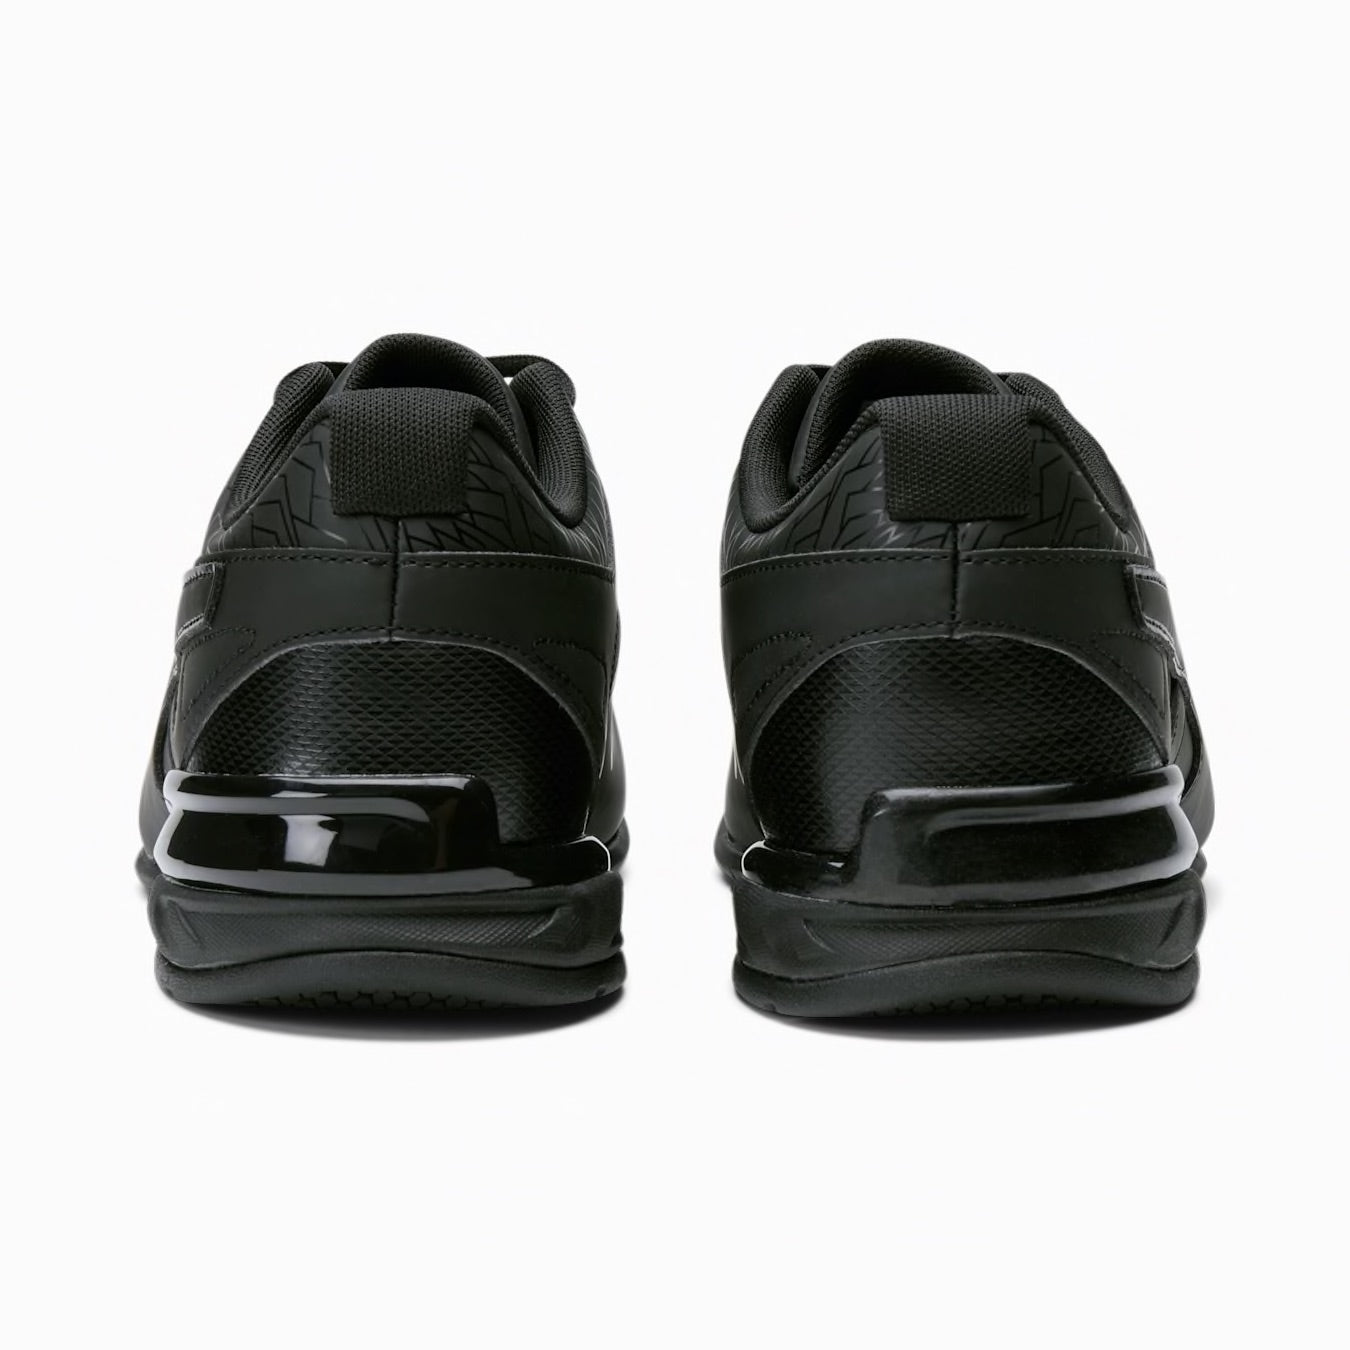 Puma Tazon 6 Fracture FM Men's Sneakers- Black